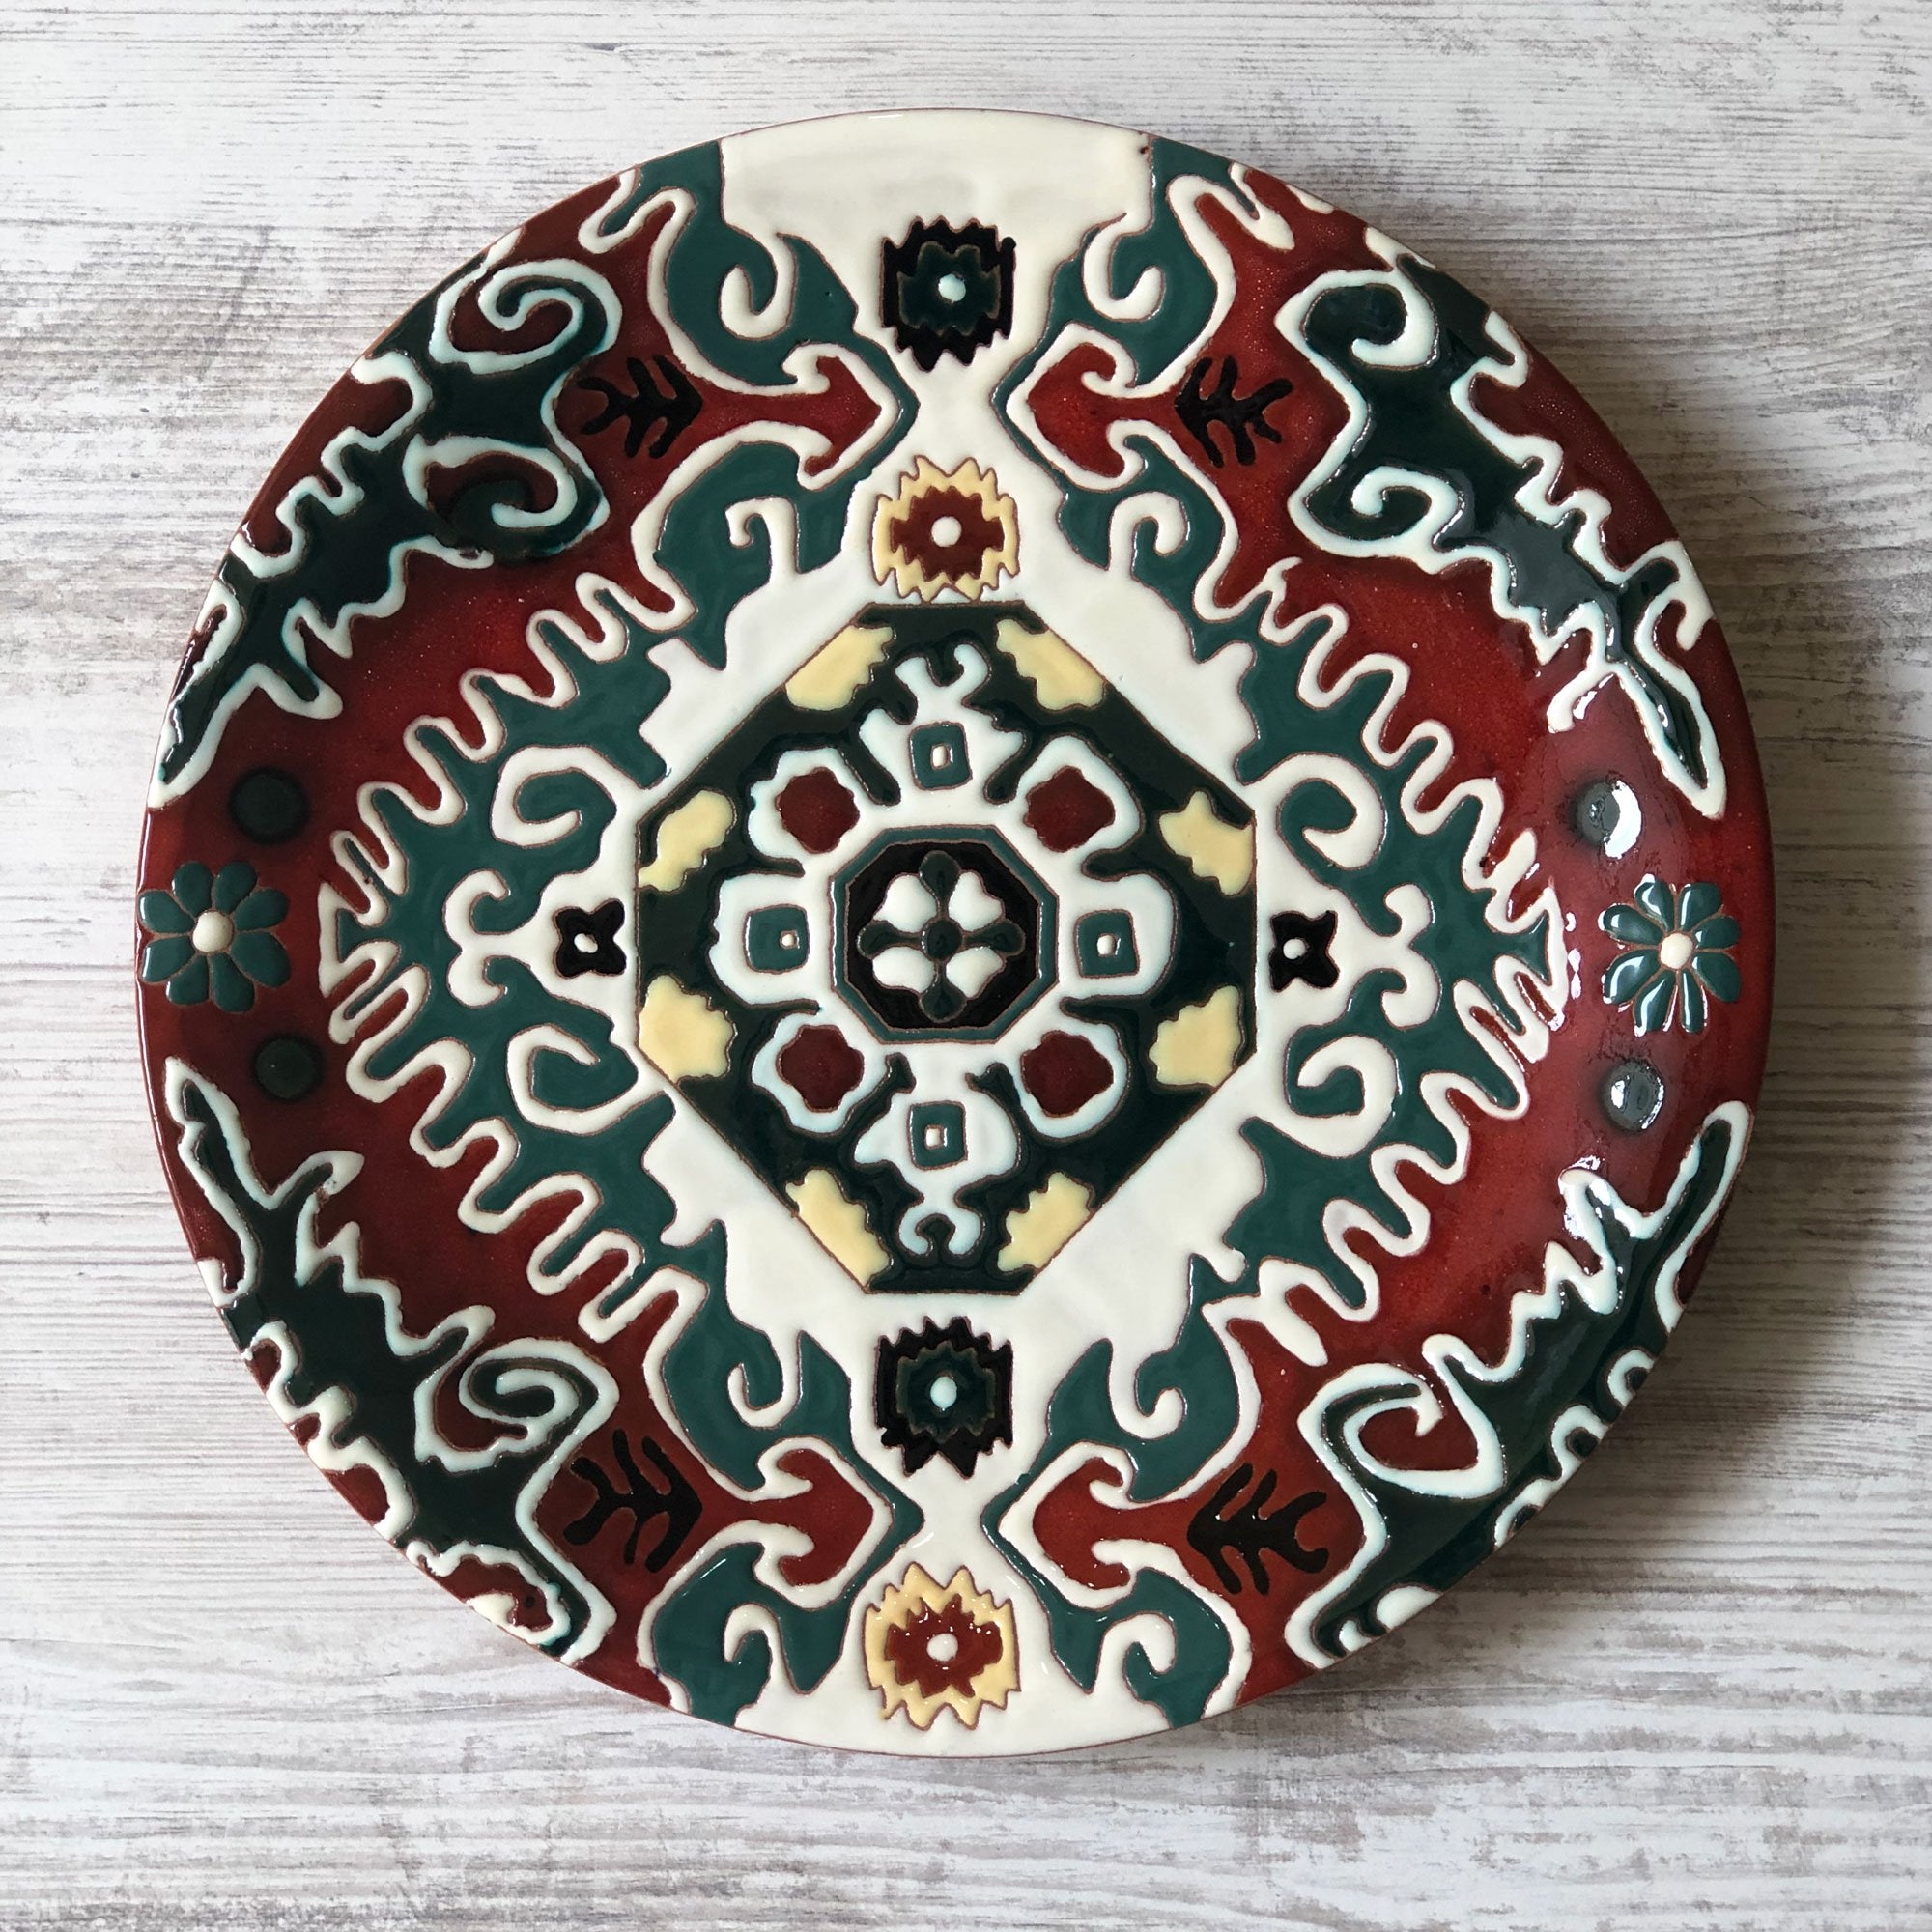 Mane Tiles Ceramic Plate with Armenian Carpet Ornaments - Artsakh